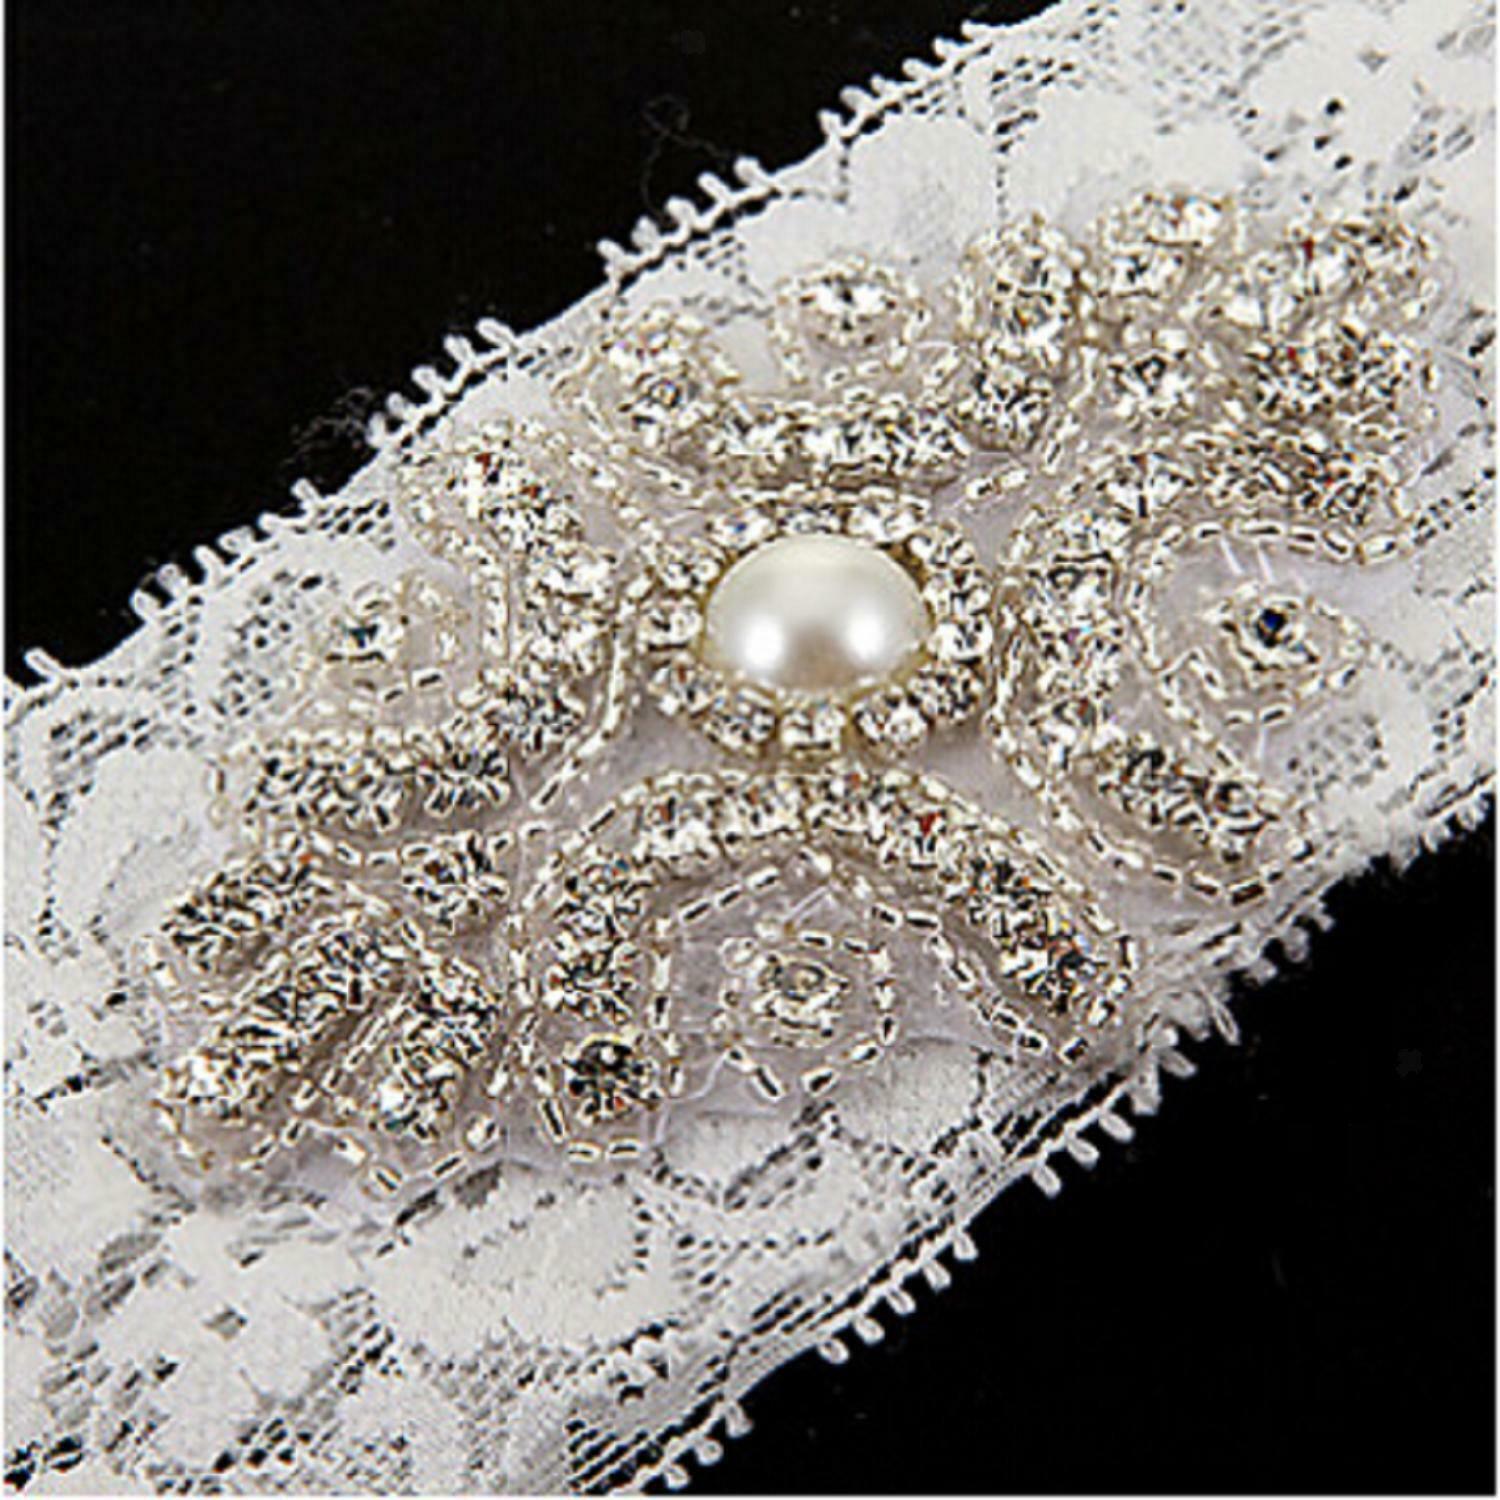 Lovely Stretchy Crystal Rhinestone Lace Bridal Garter Accessory